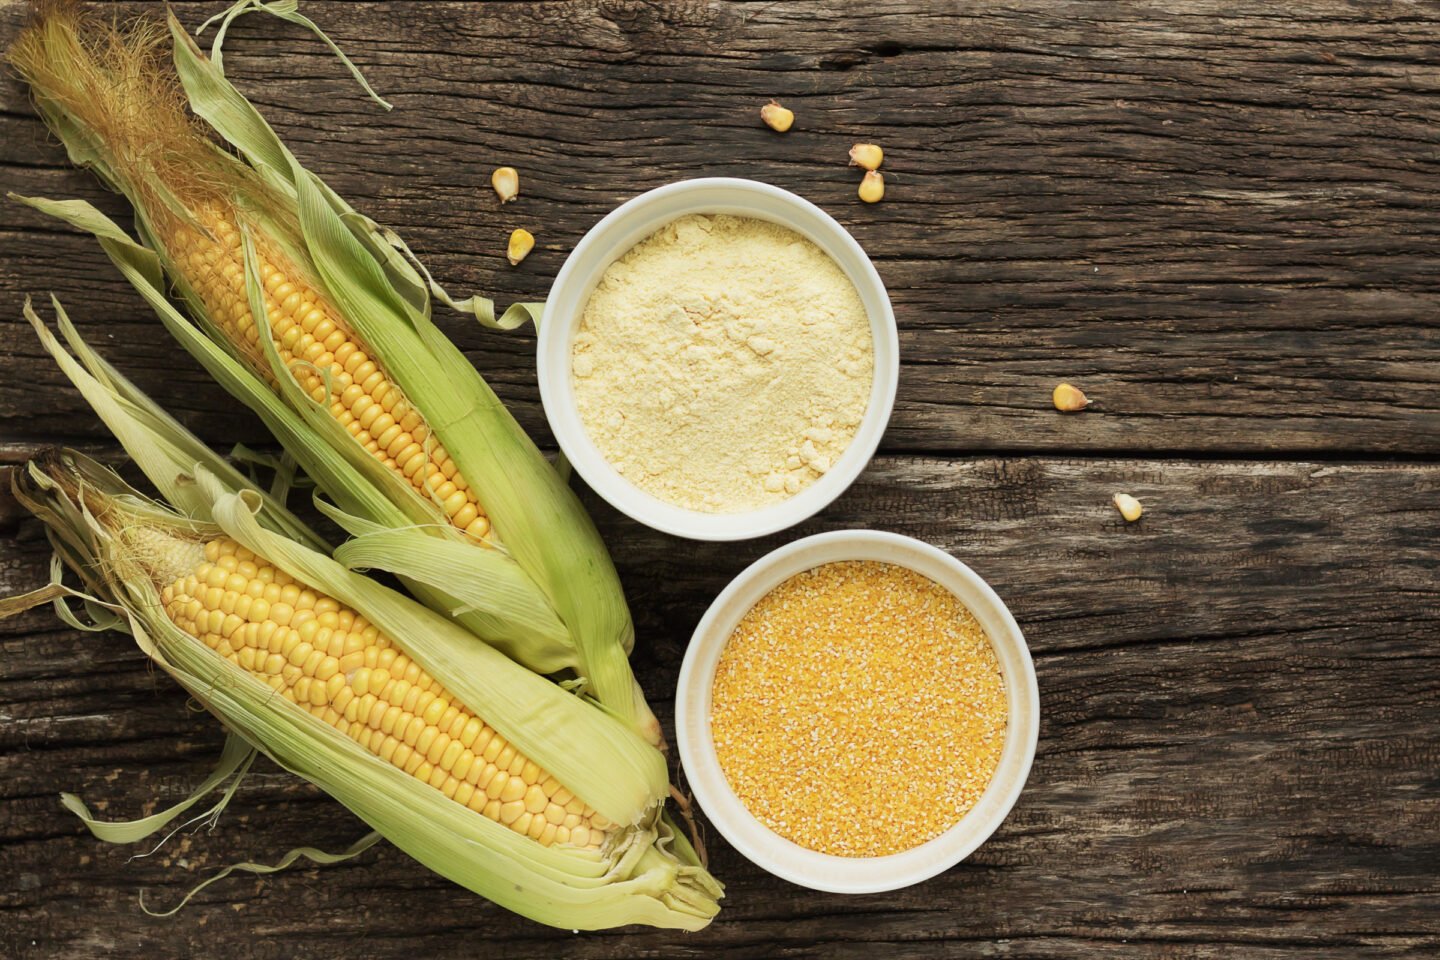 cornmeal corn flour and grits